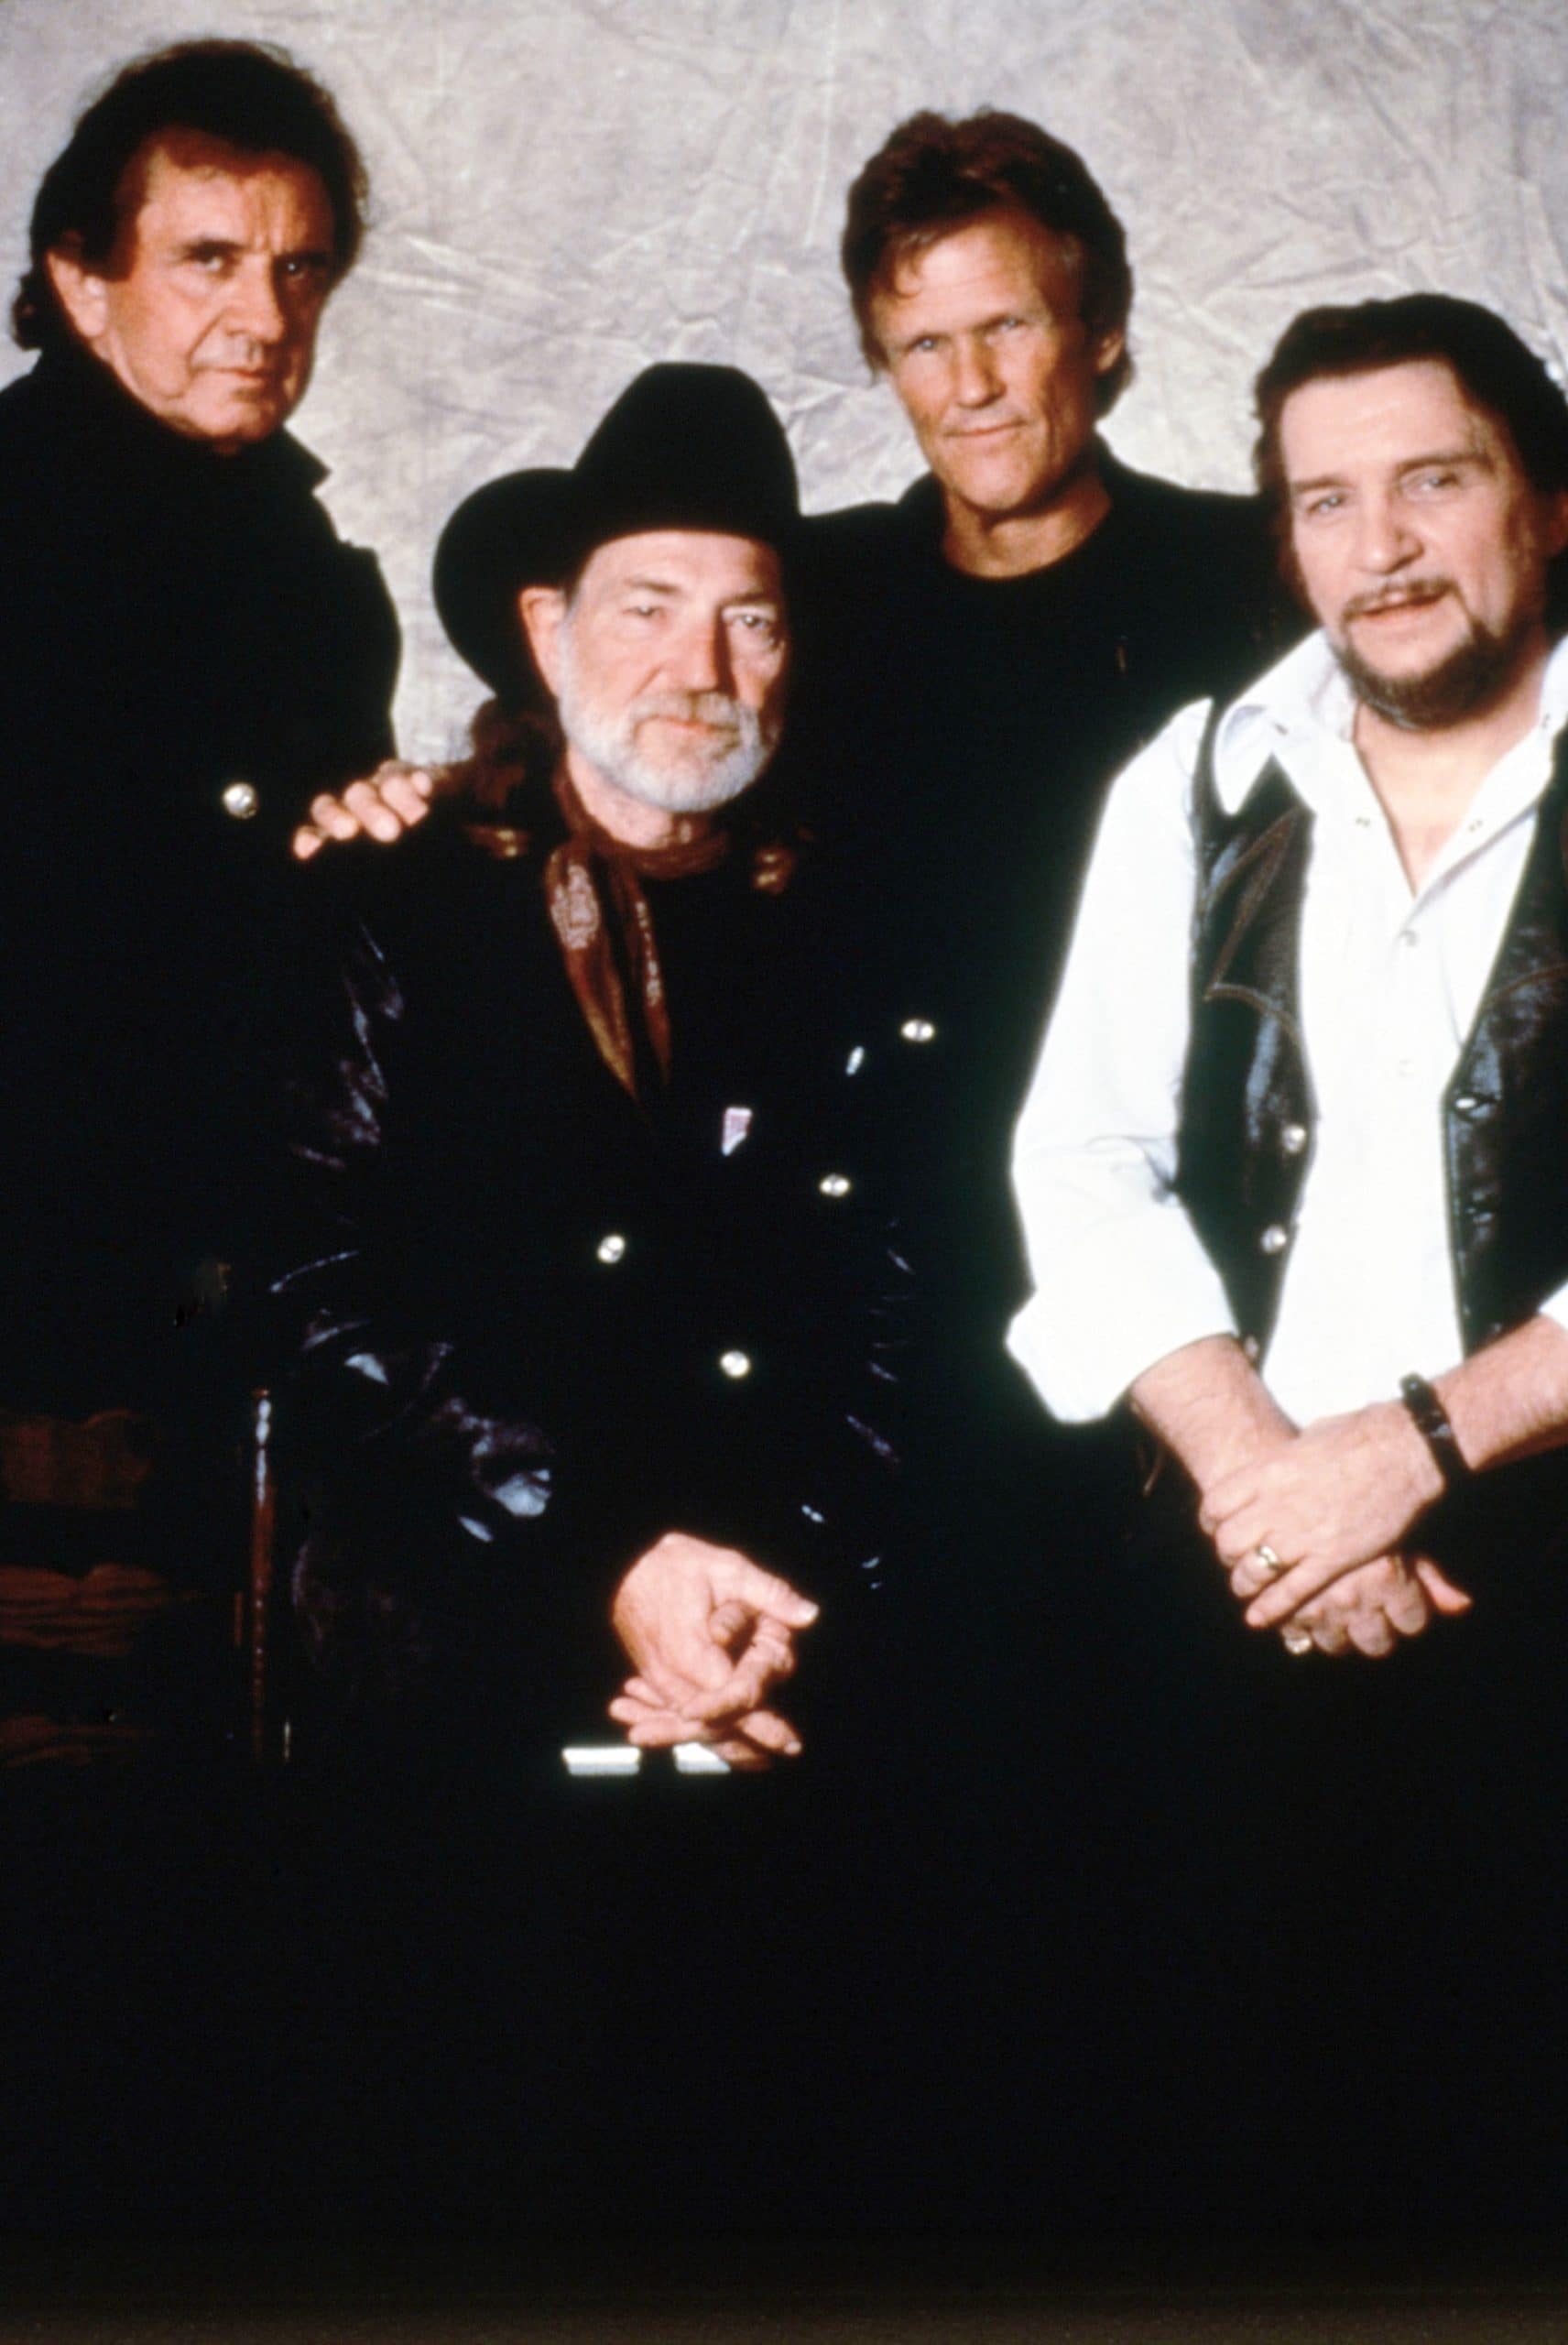 THE HIGHWAYMEN IN CENTRAL PARK, from left: Johnny Cash, Willie Nelson, Kris Kristofferson, Waylon Jennings